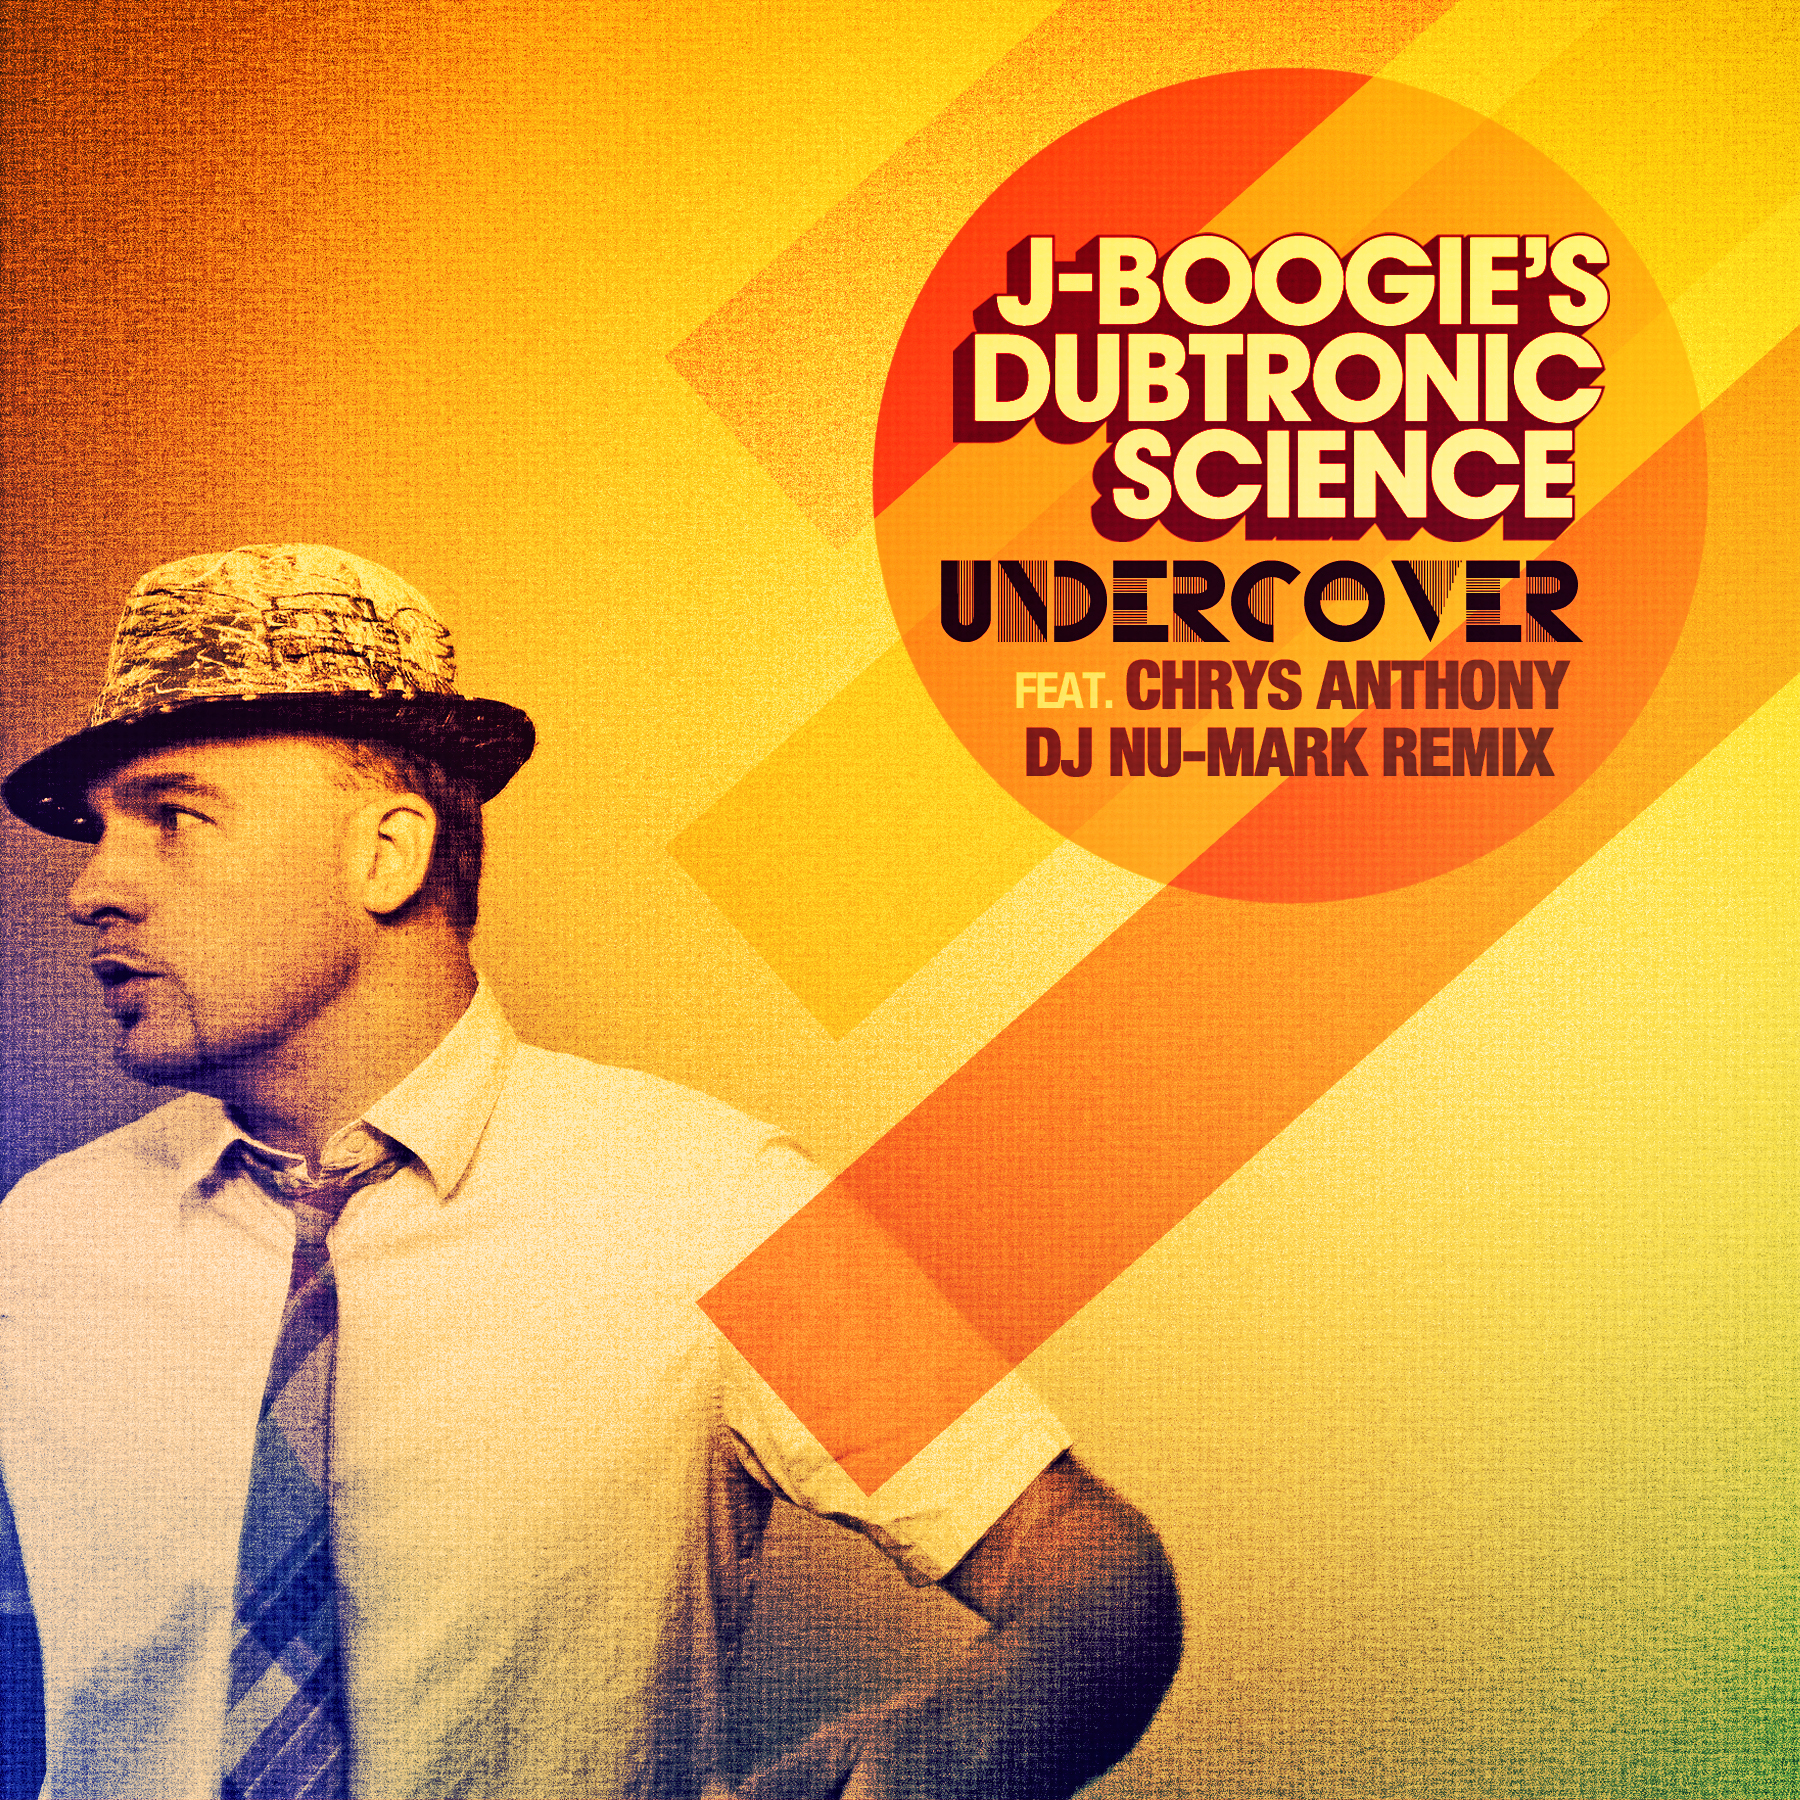 Free MP3: J-Boogie – Undercover (DJ Nu-Mark Remix)